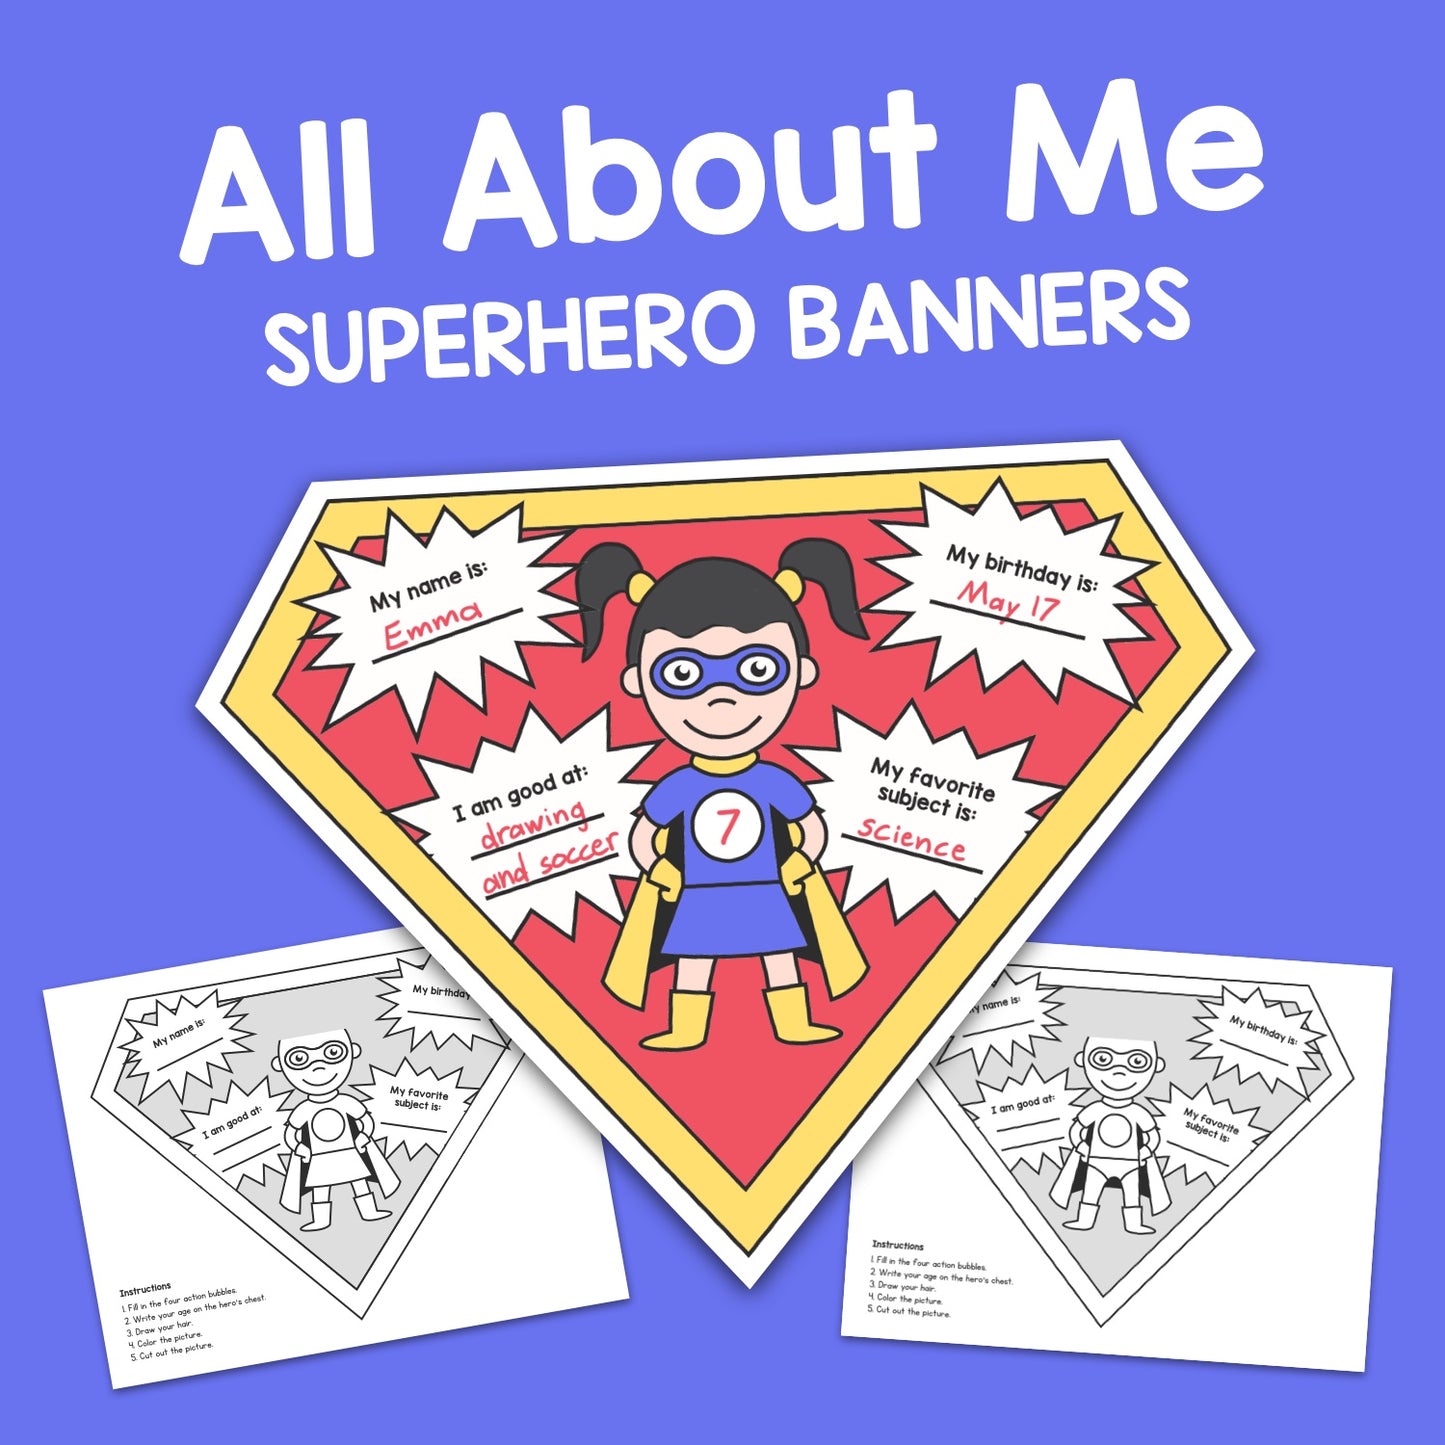 Superhero Banners